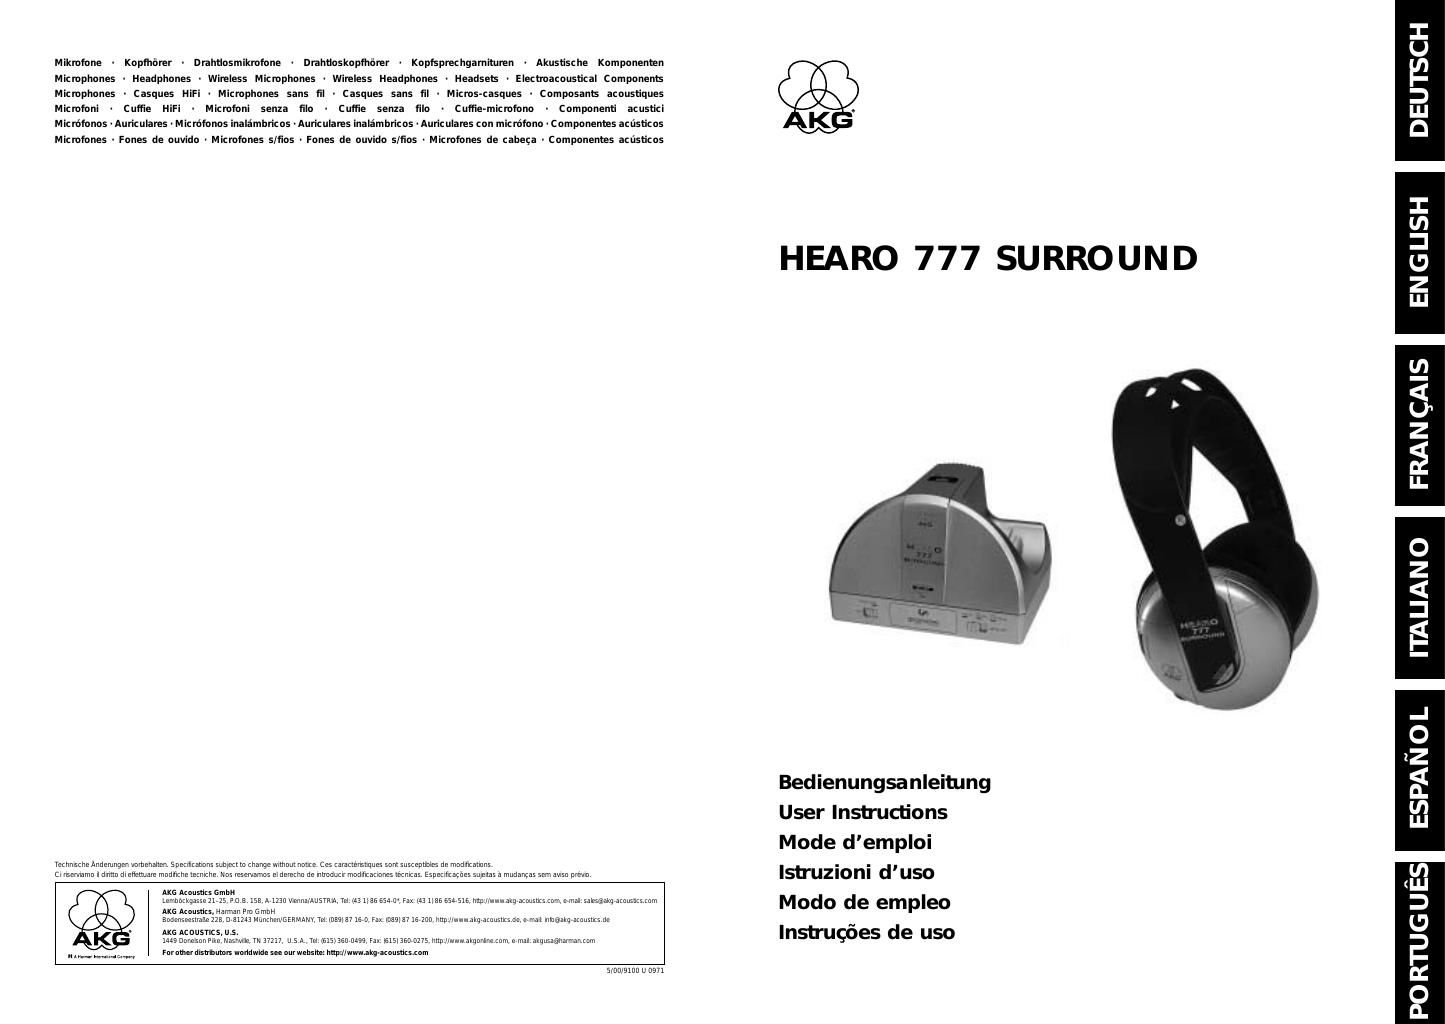 akg hearo 777 surround owners manual